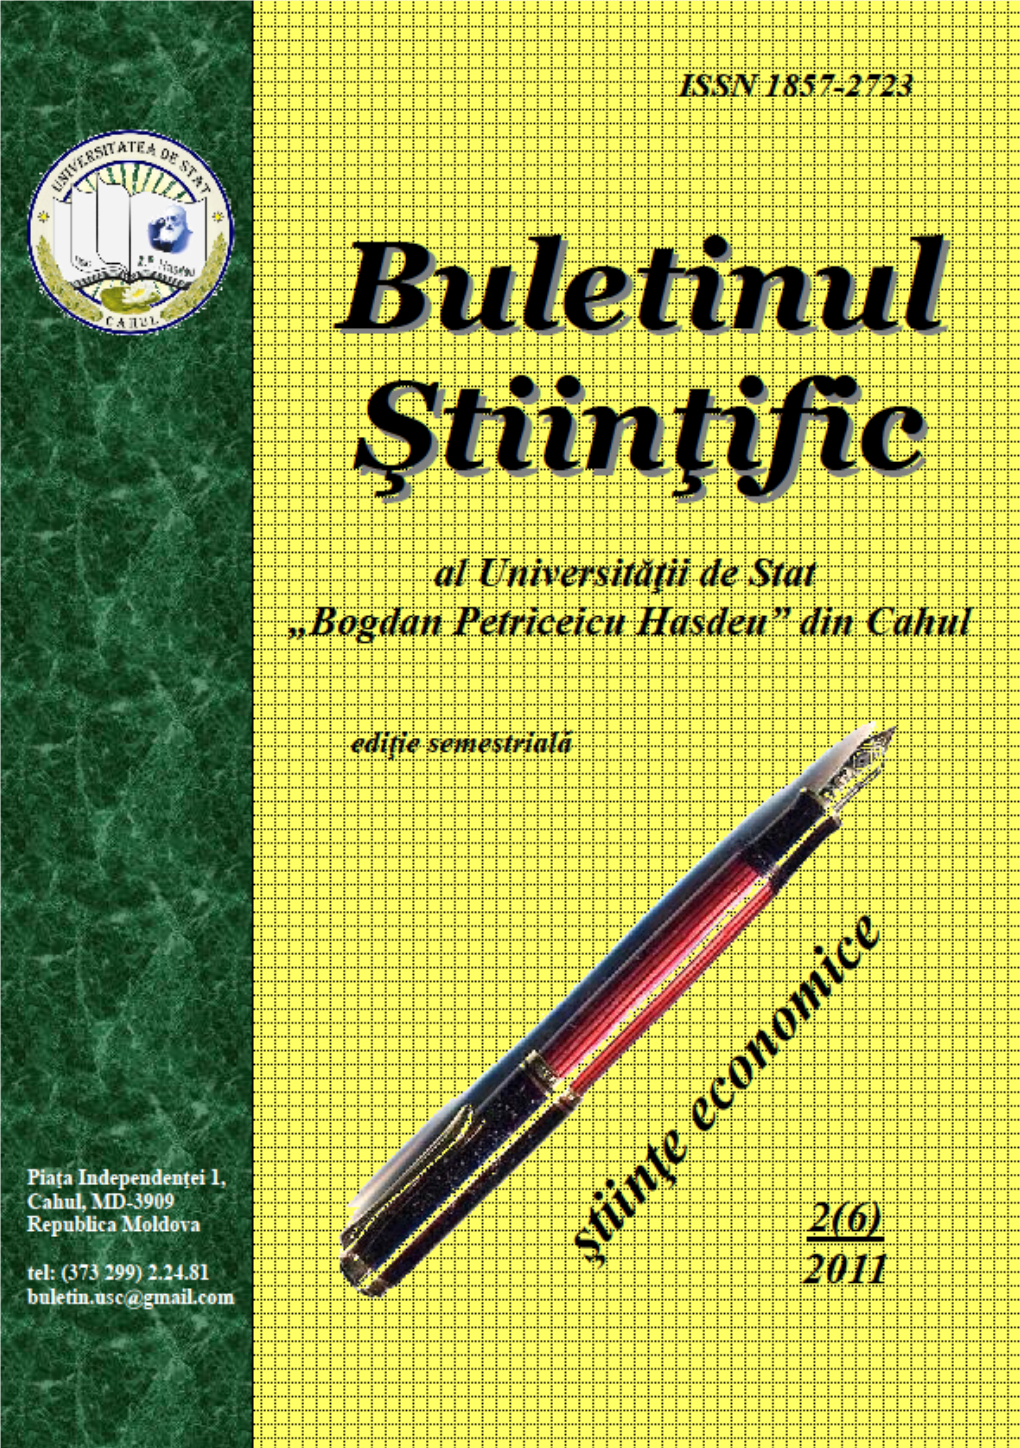 2011-Buletinul Științific